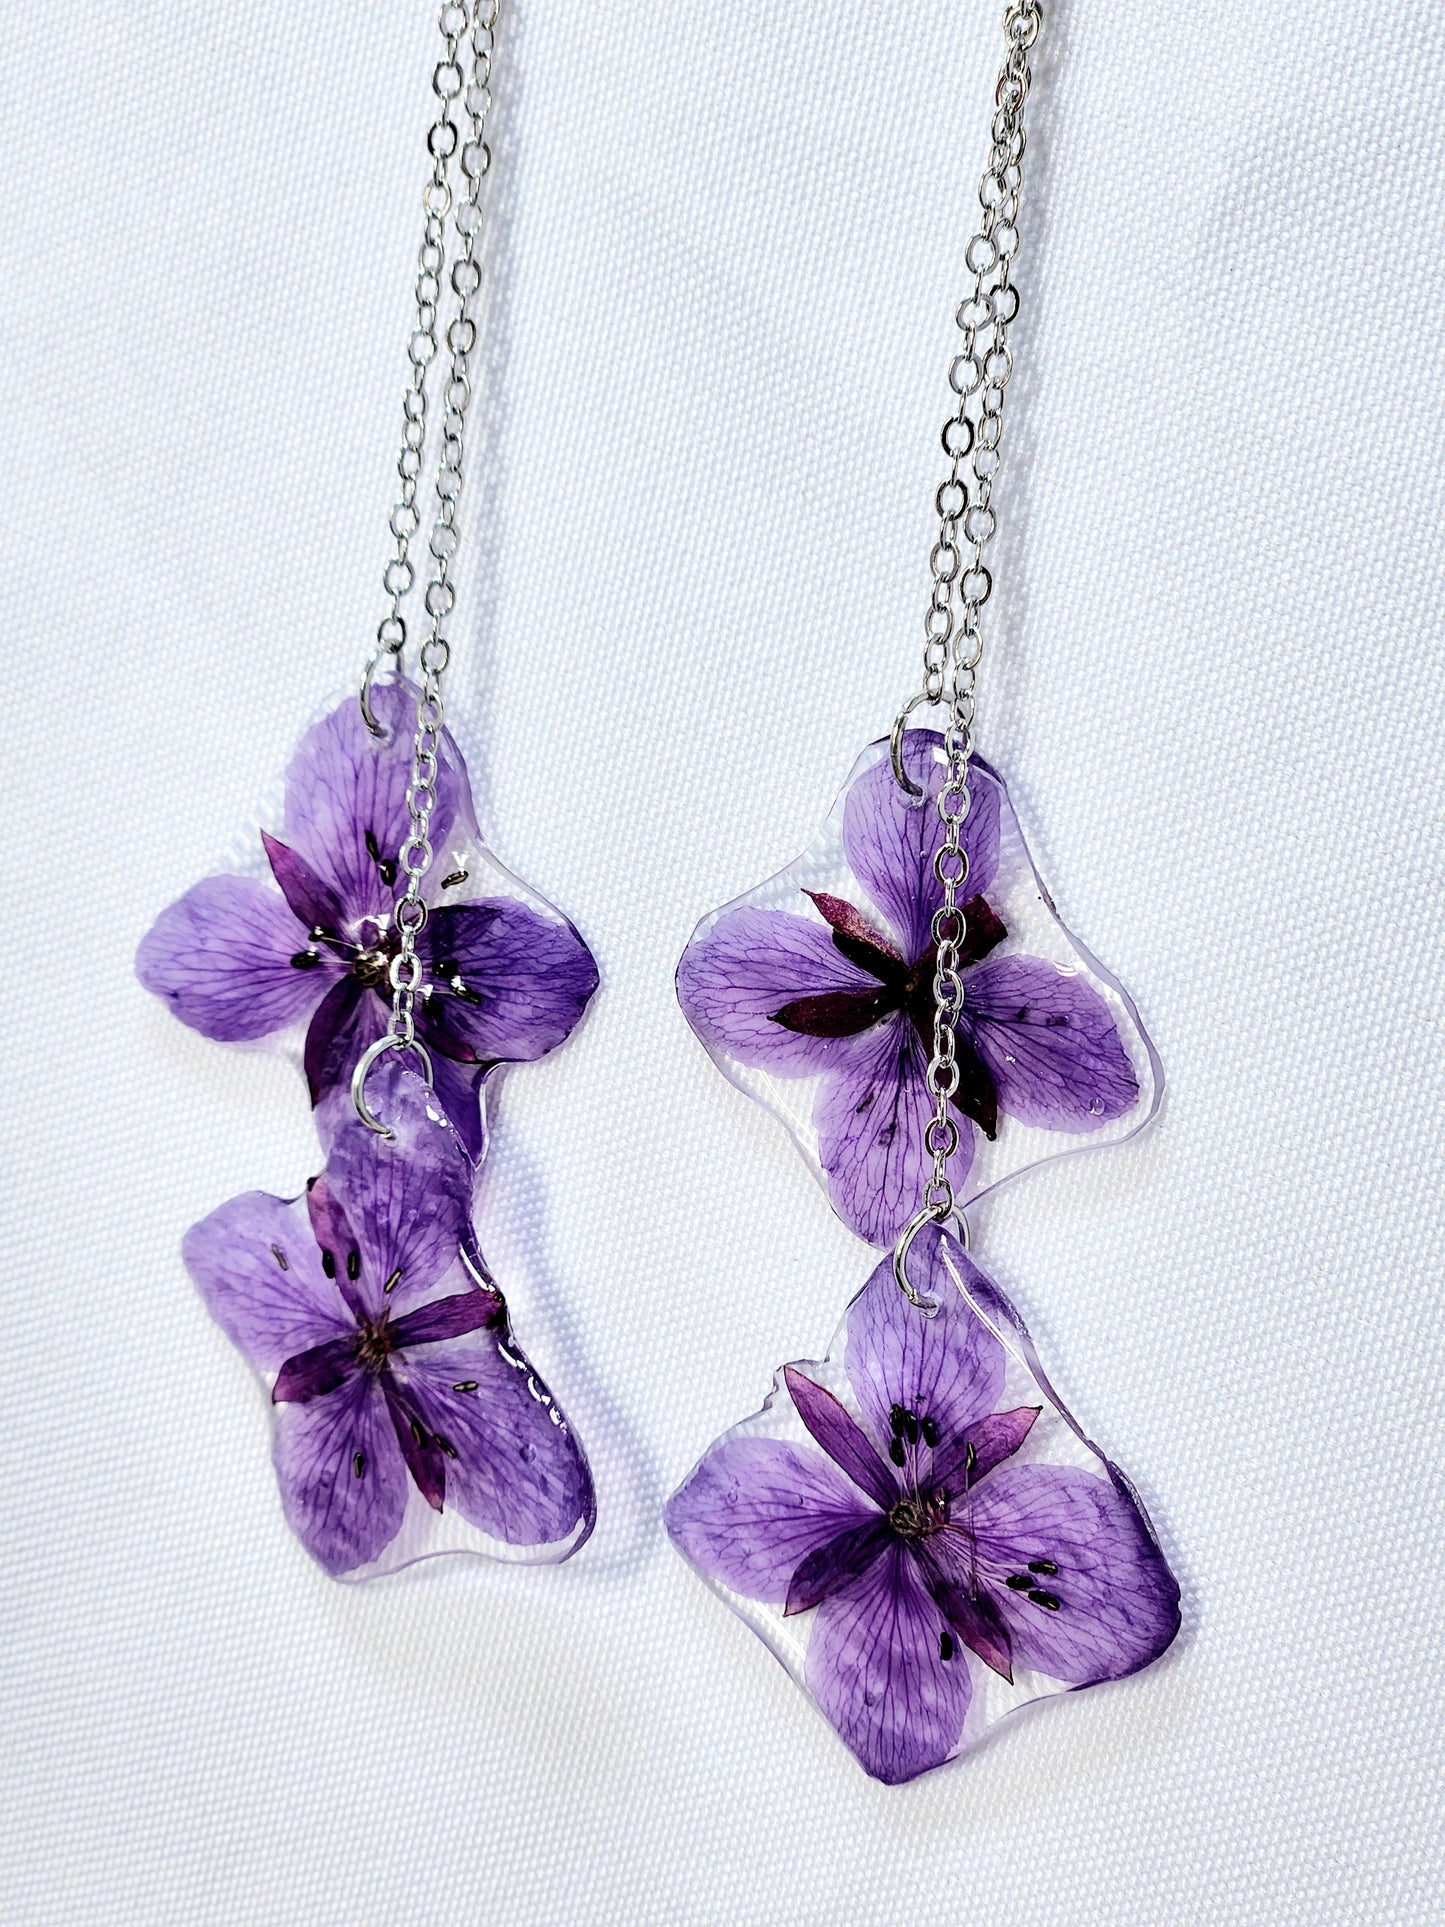 Fireweed flower earrings